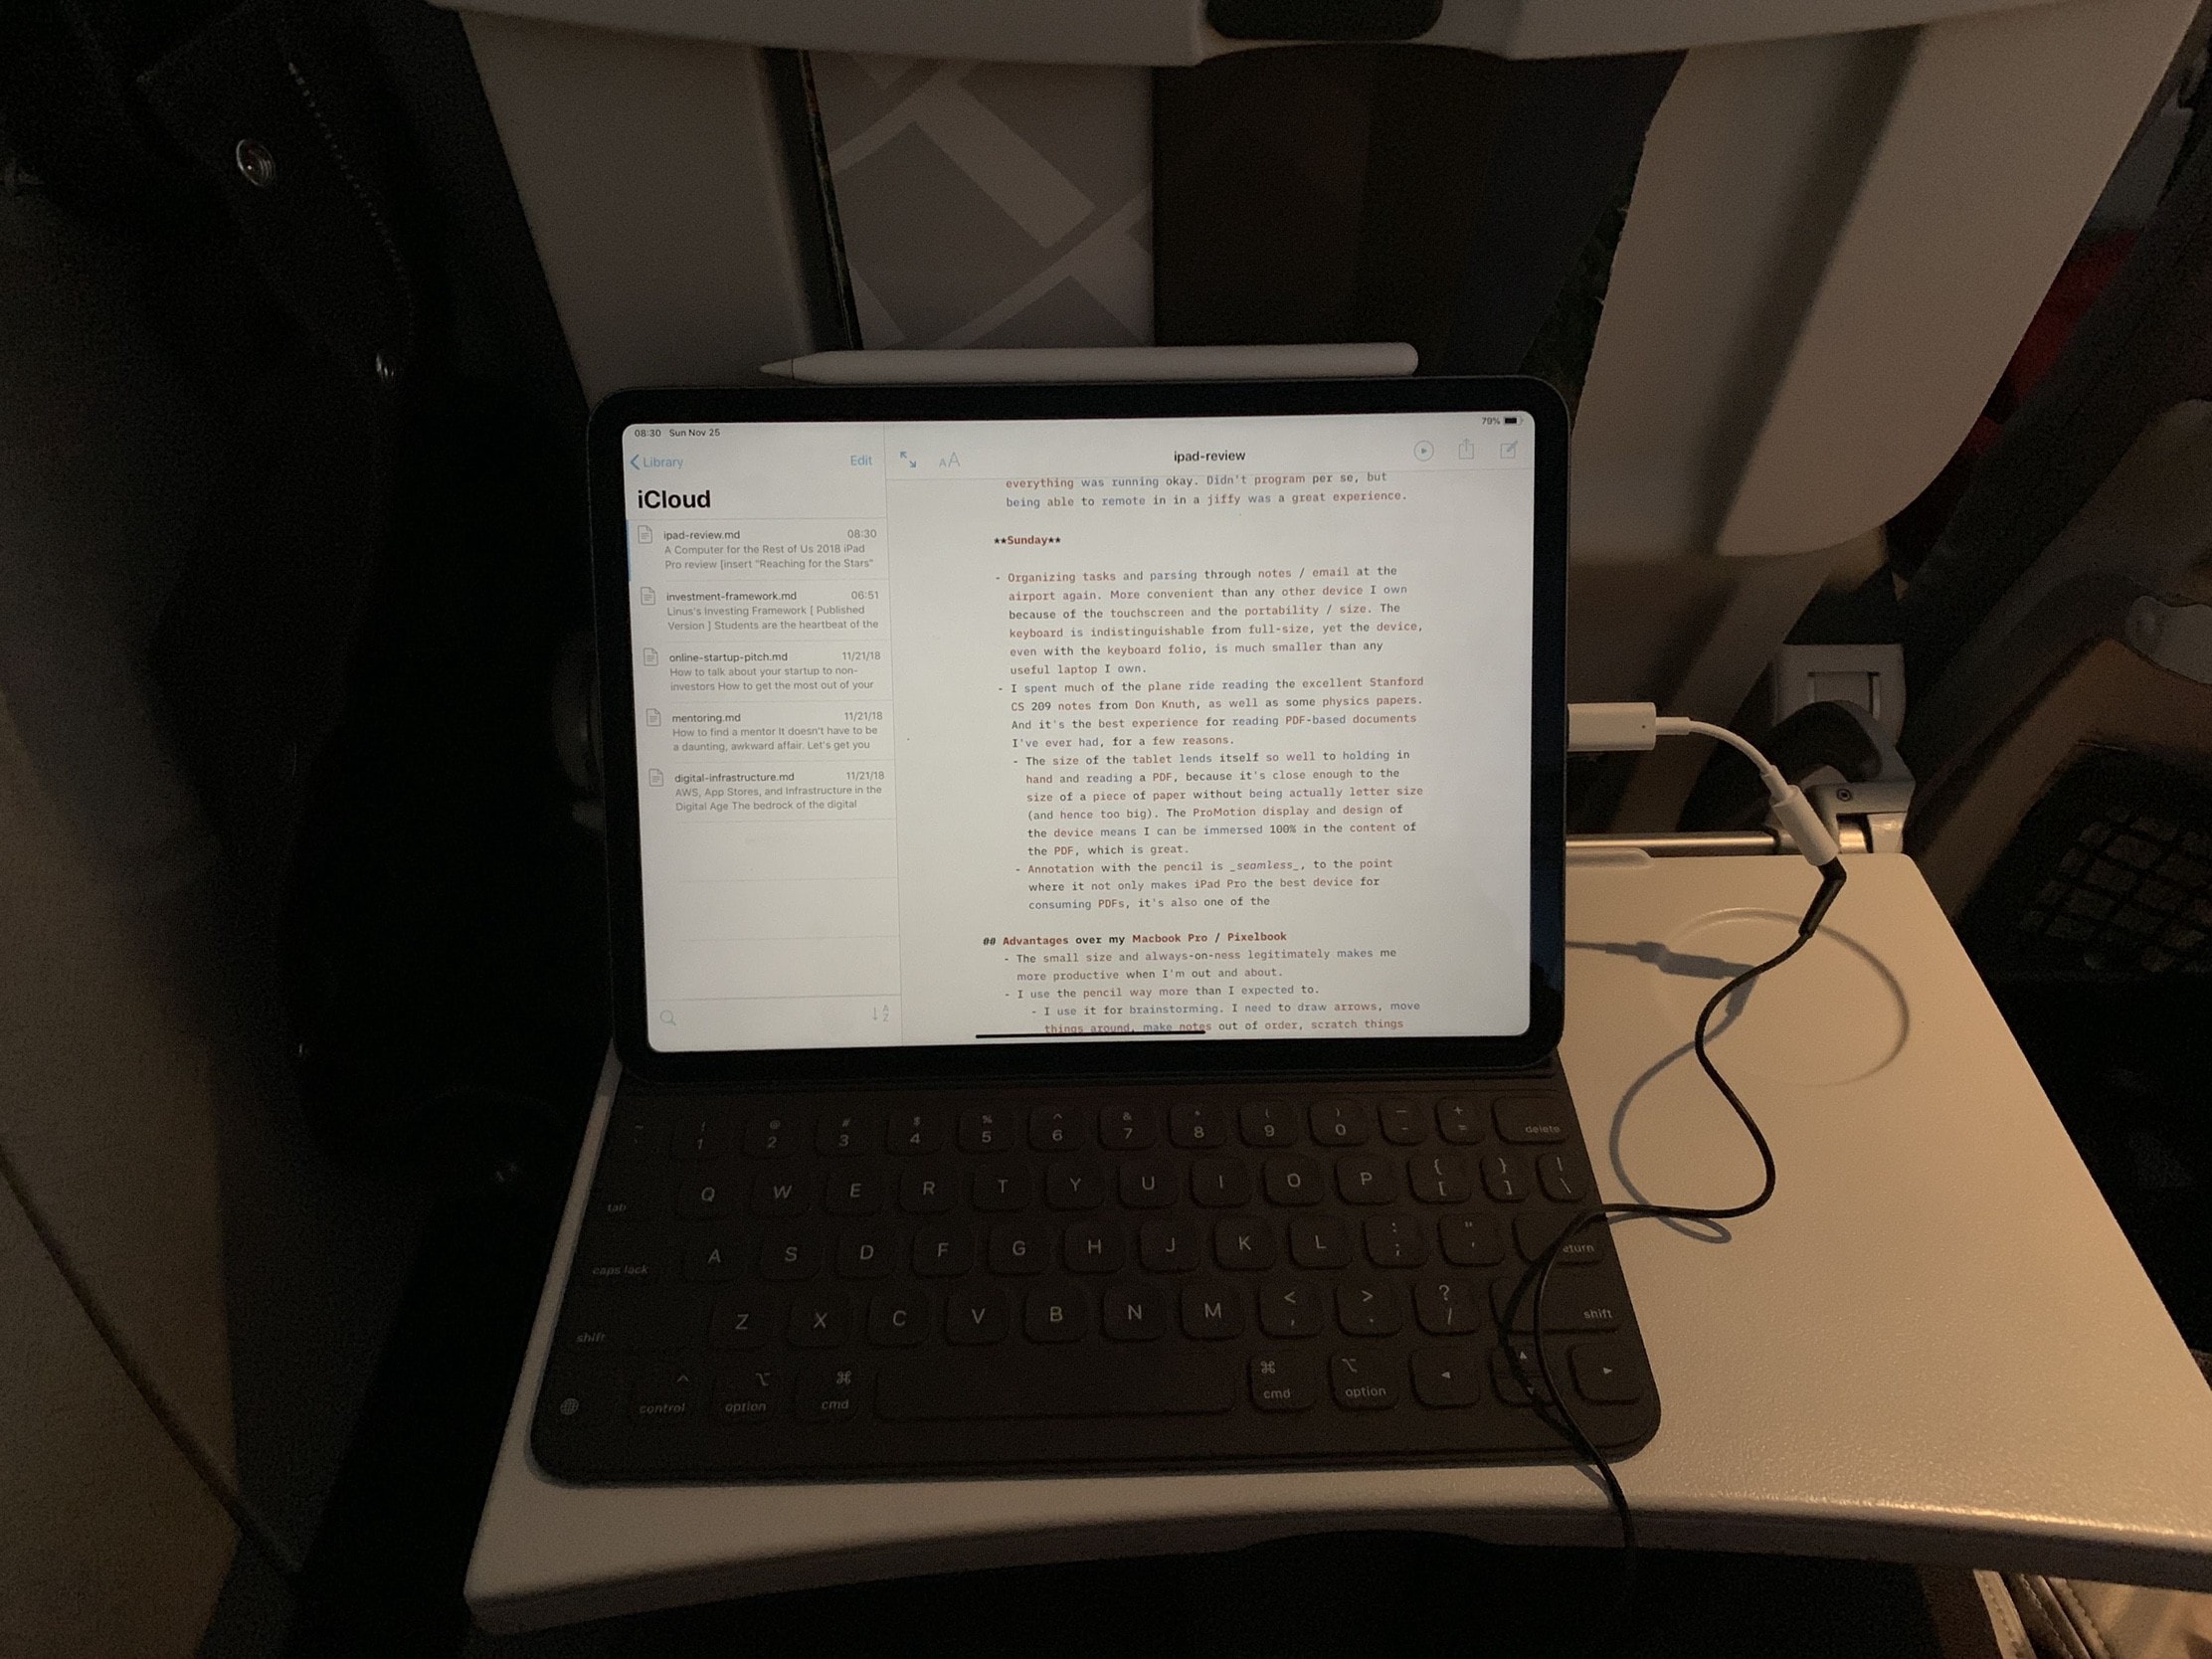 iPad as an airplane computer